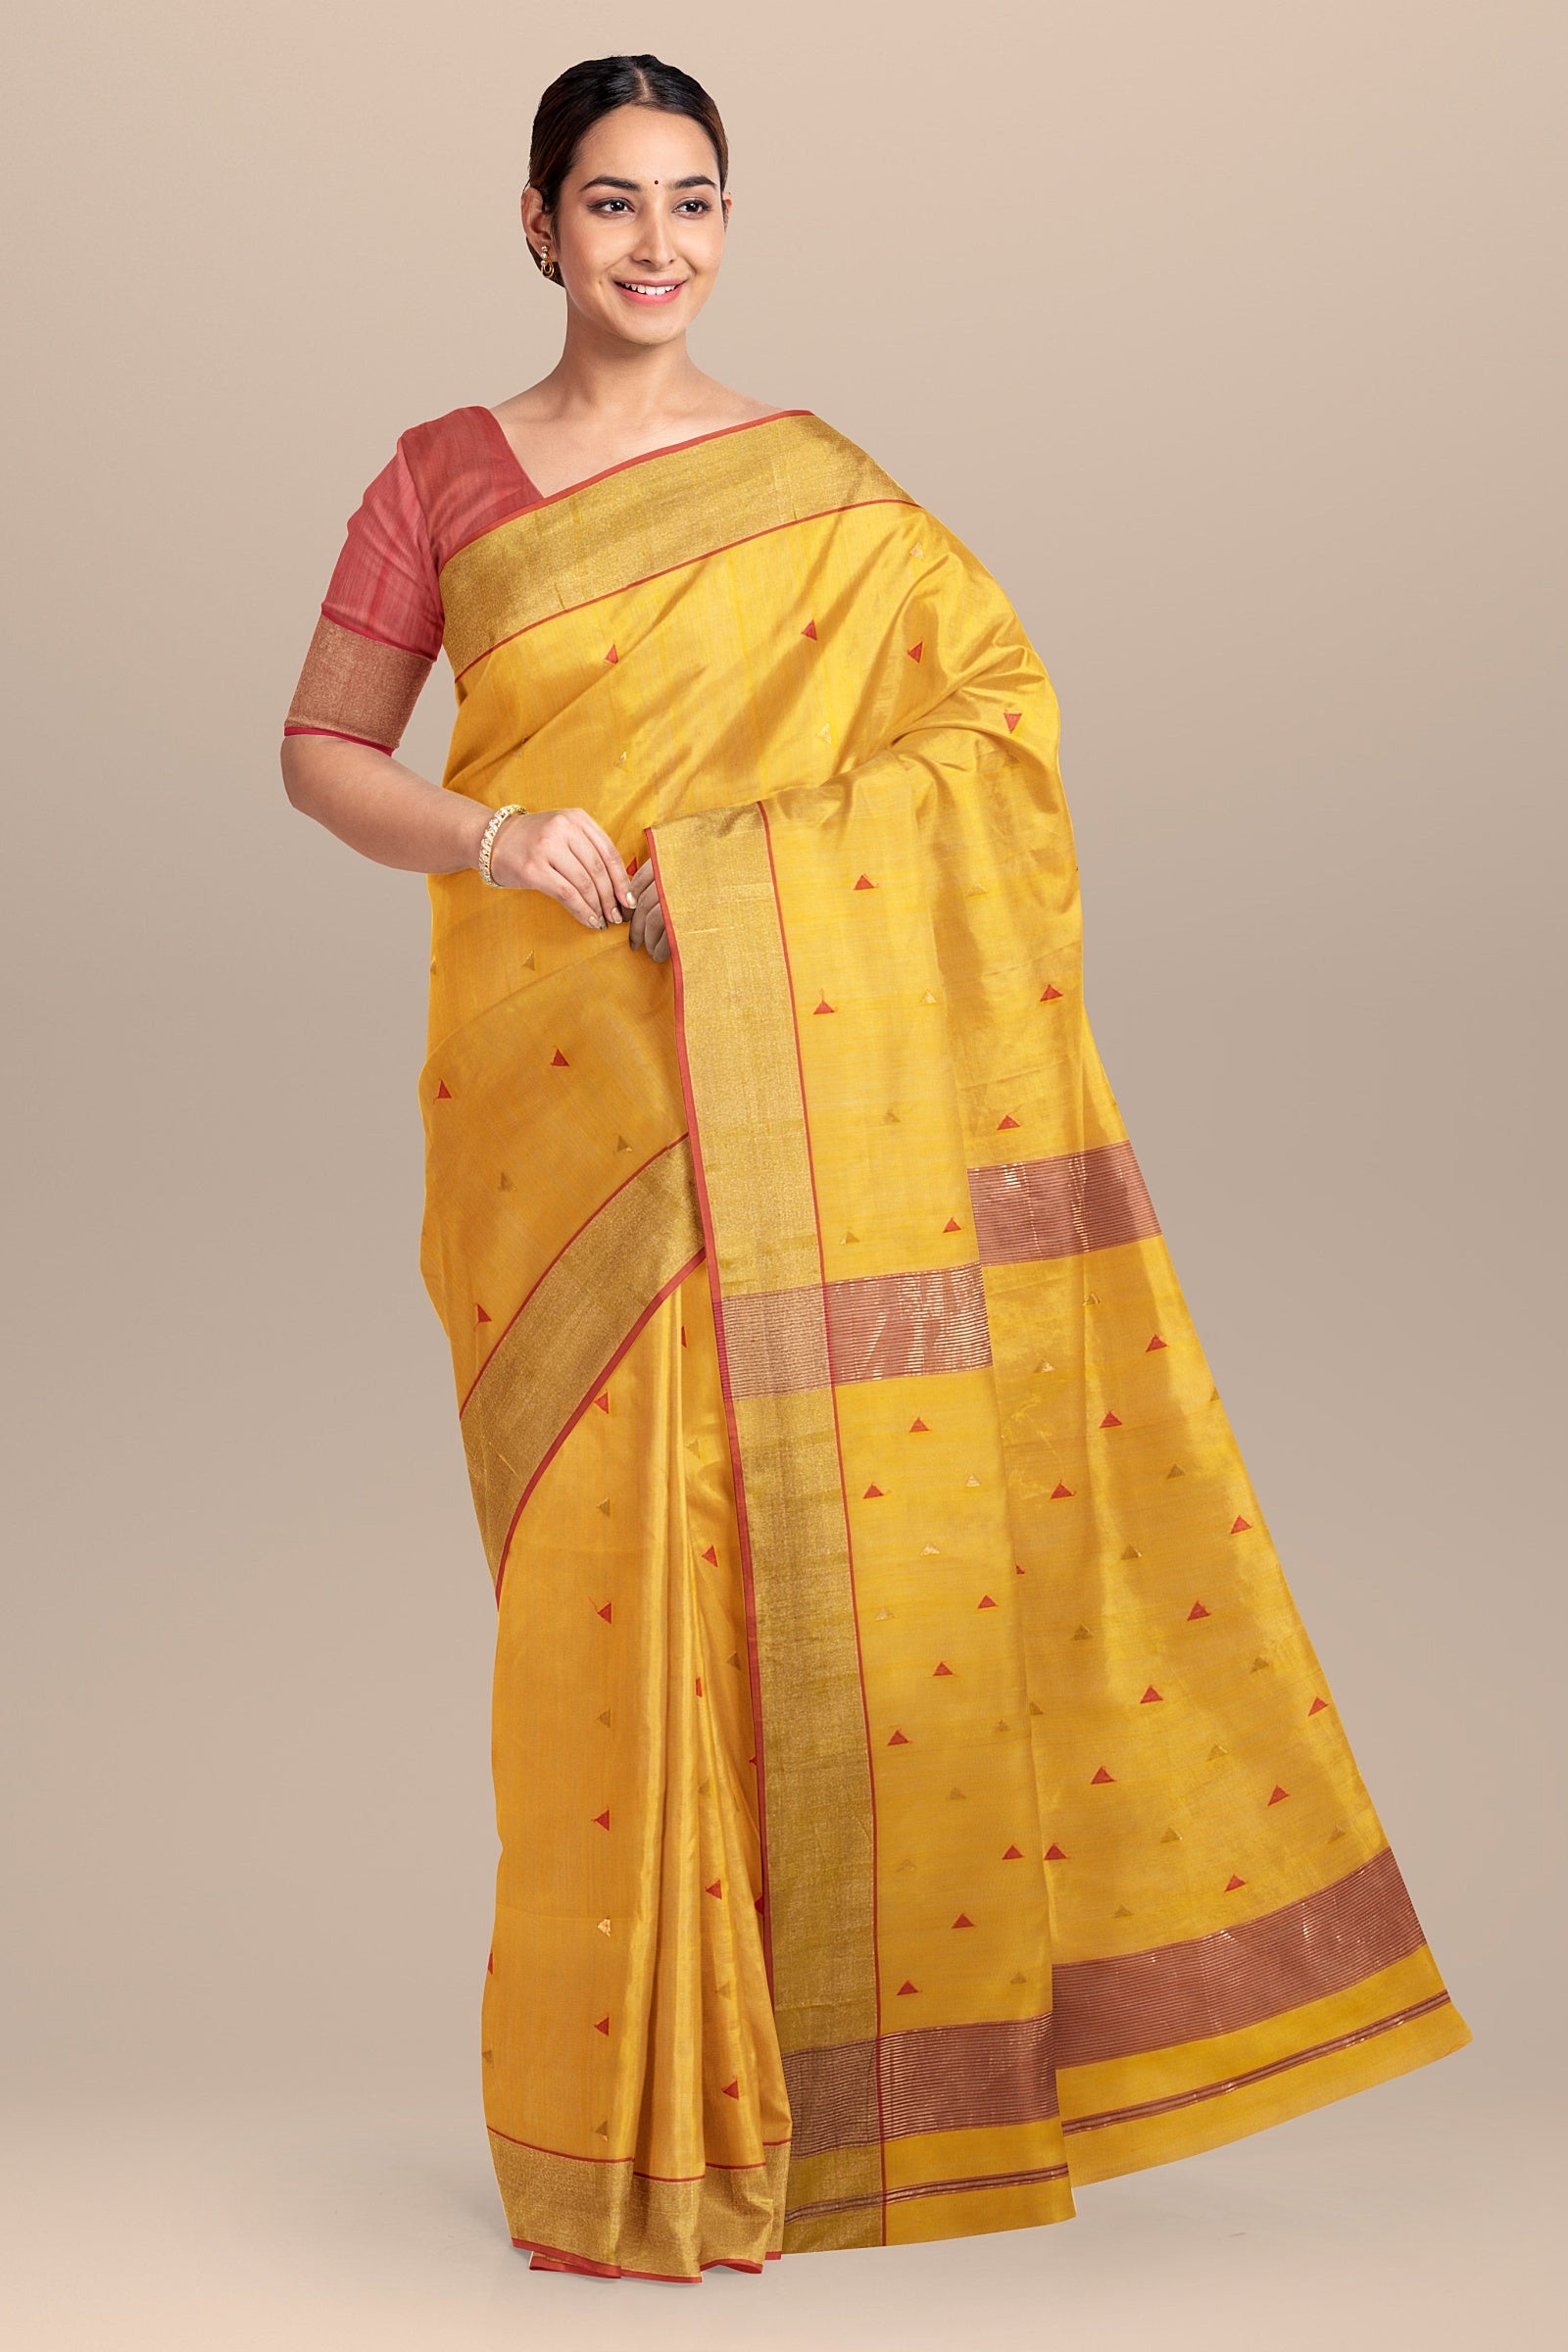 Hand Woven Golden Yellow Color Traditional Triangle Buti Sausar Silk with Zari Border Saree SKU- BS10006 - Bhartiya Shilp